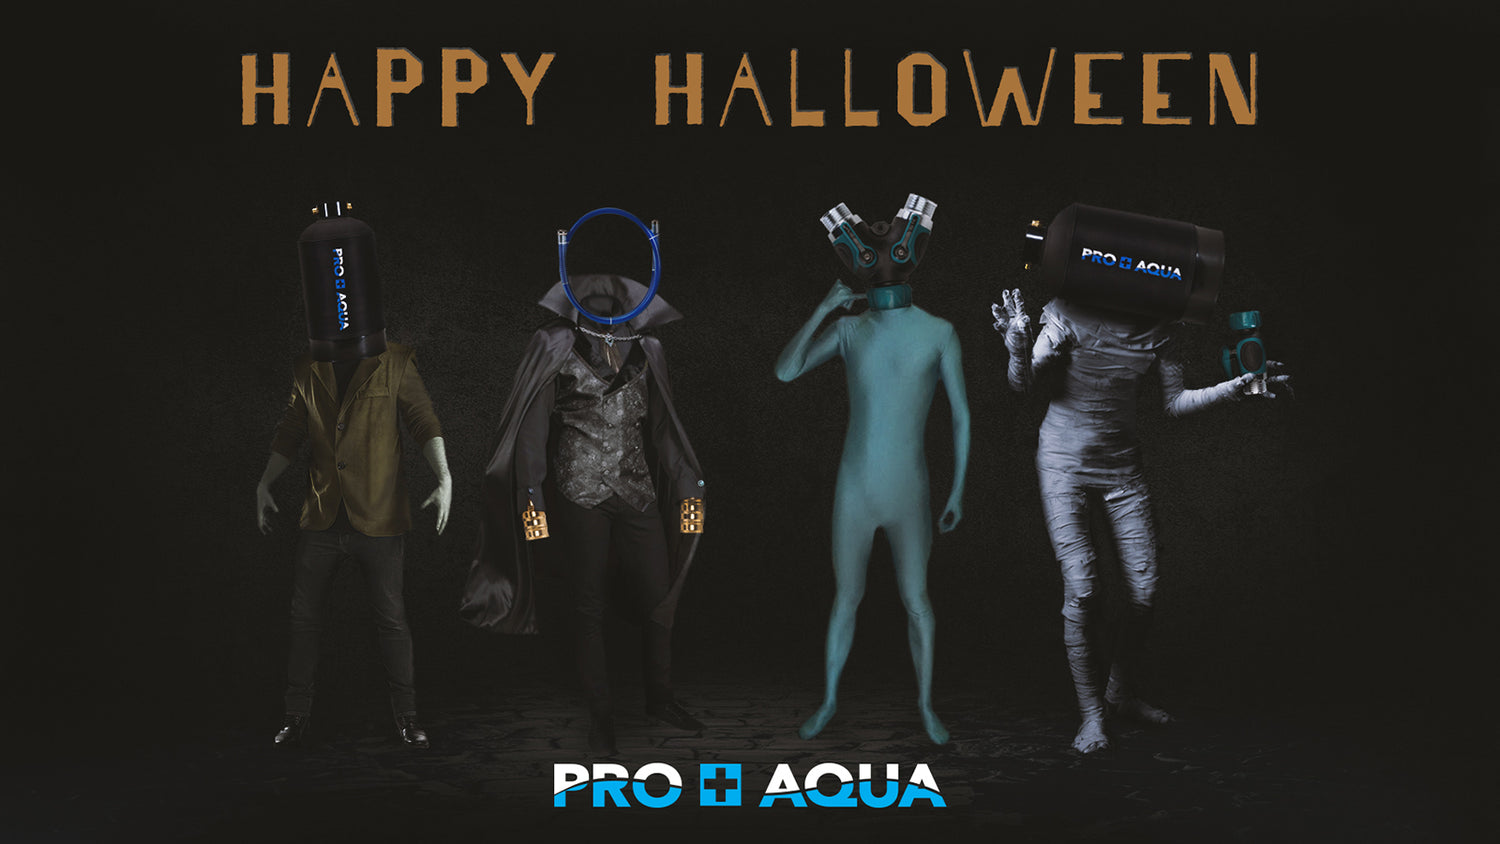 Pro+aqua halloween